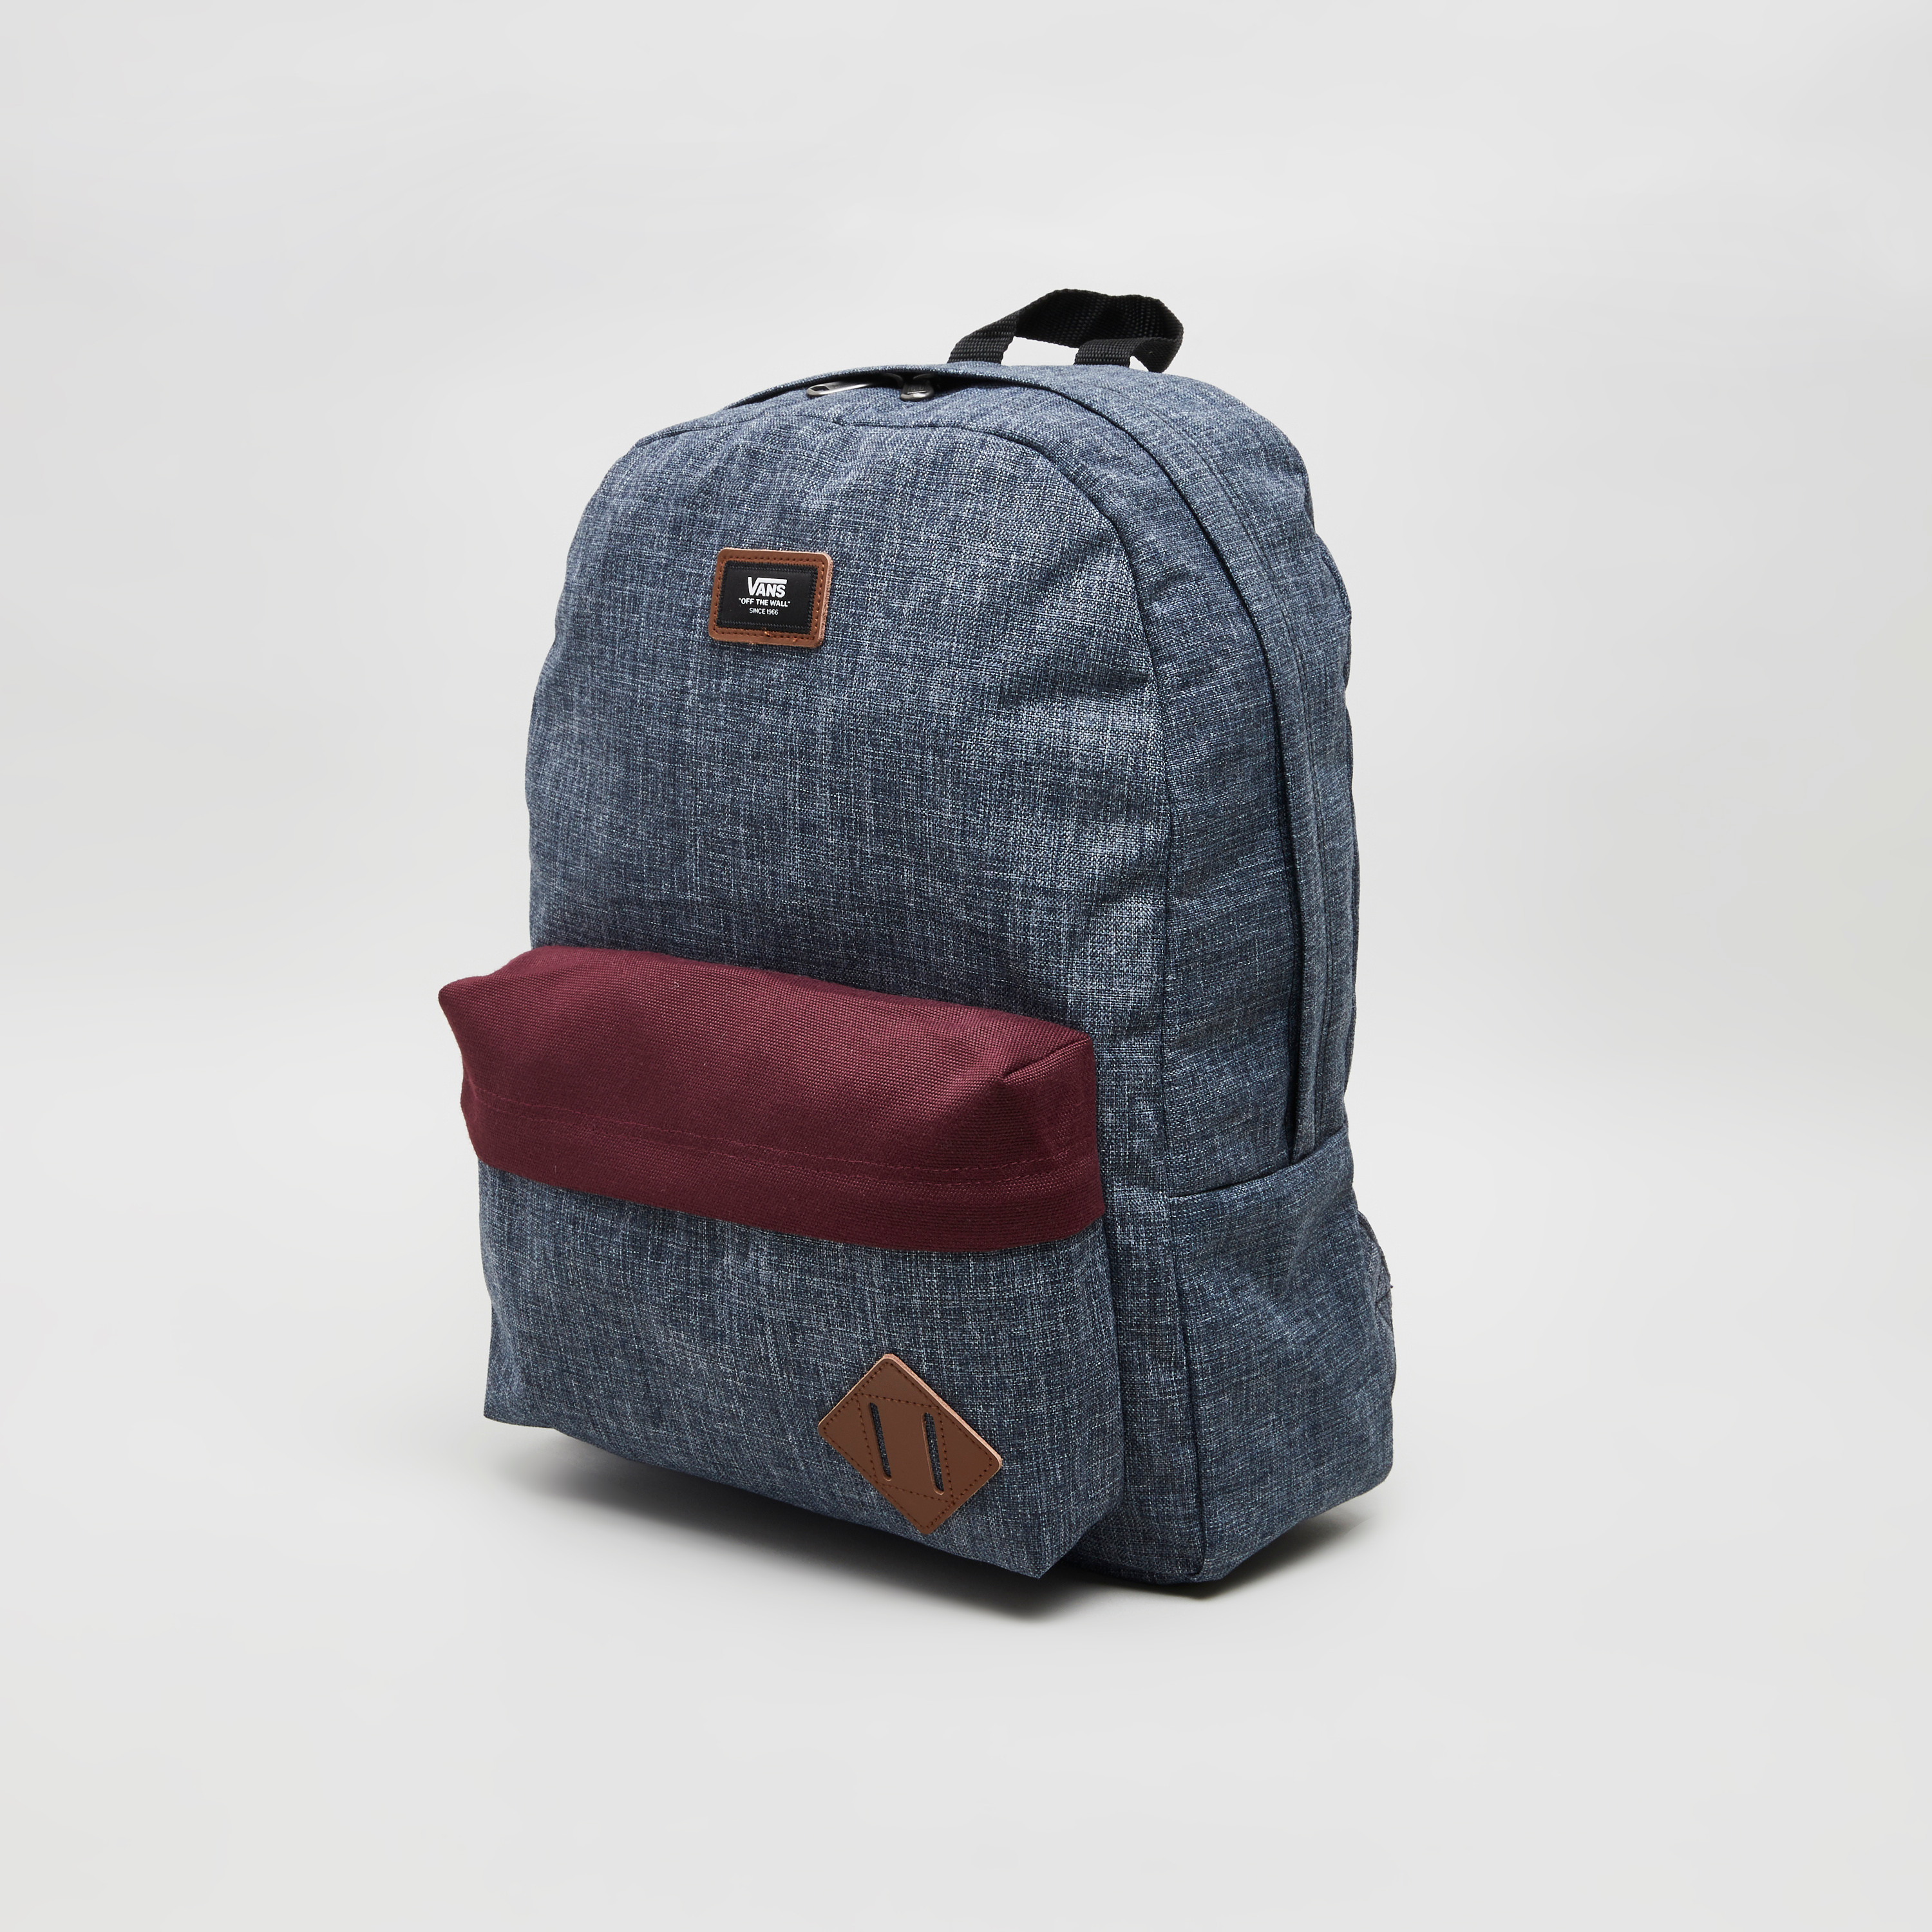 Vans Calico Denim Patch Mini Backpack School Bag - Walmart.com